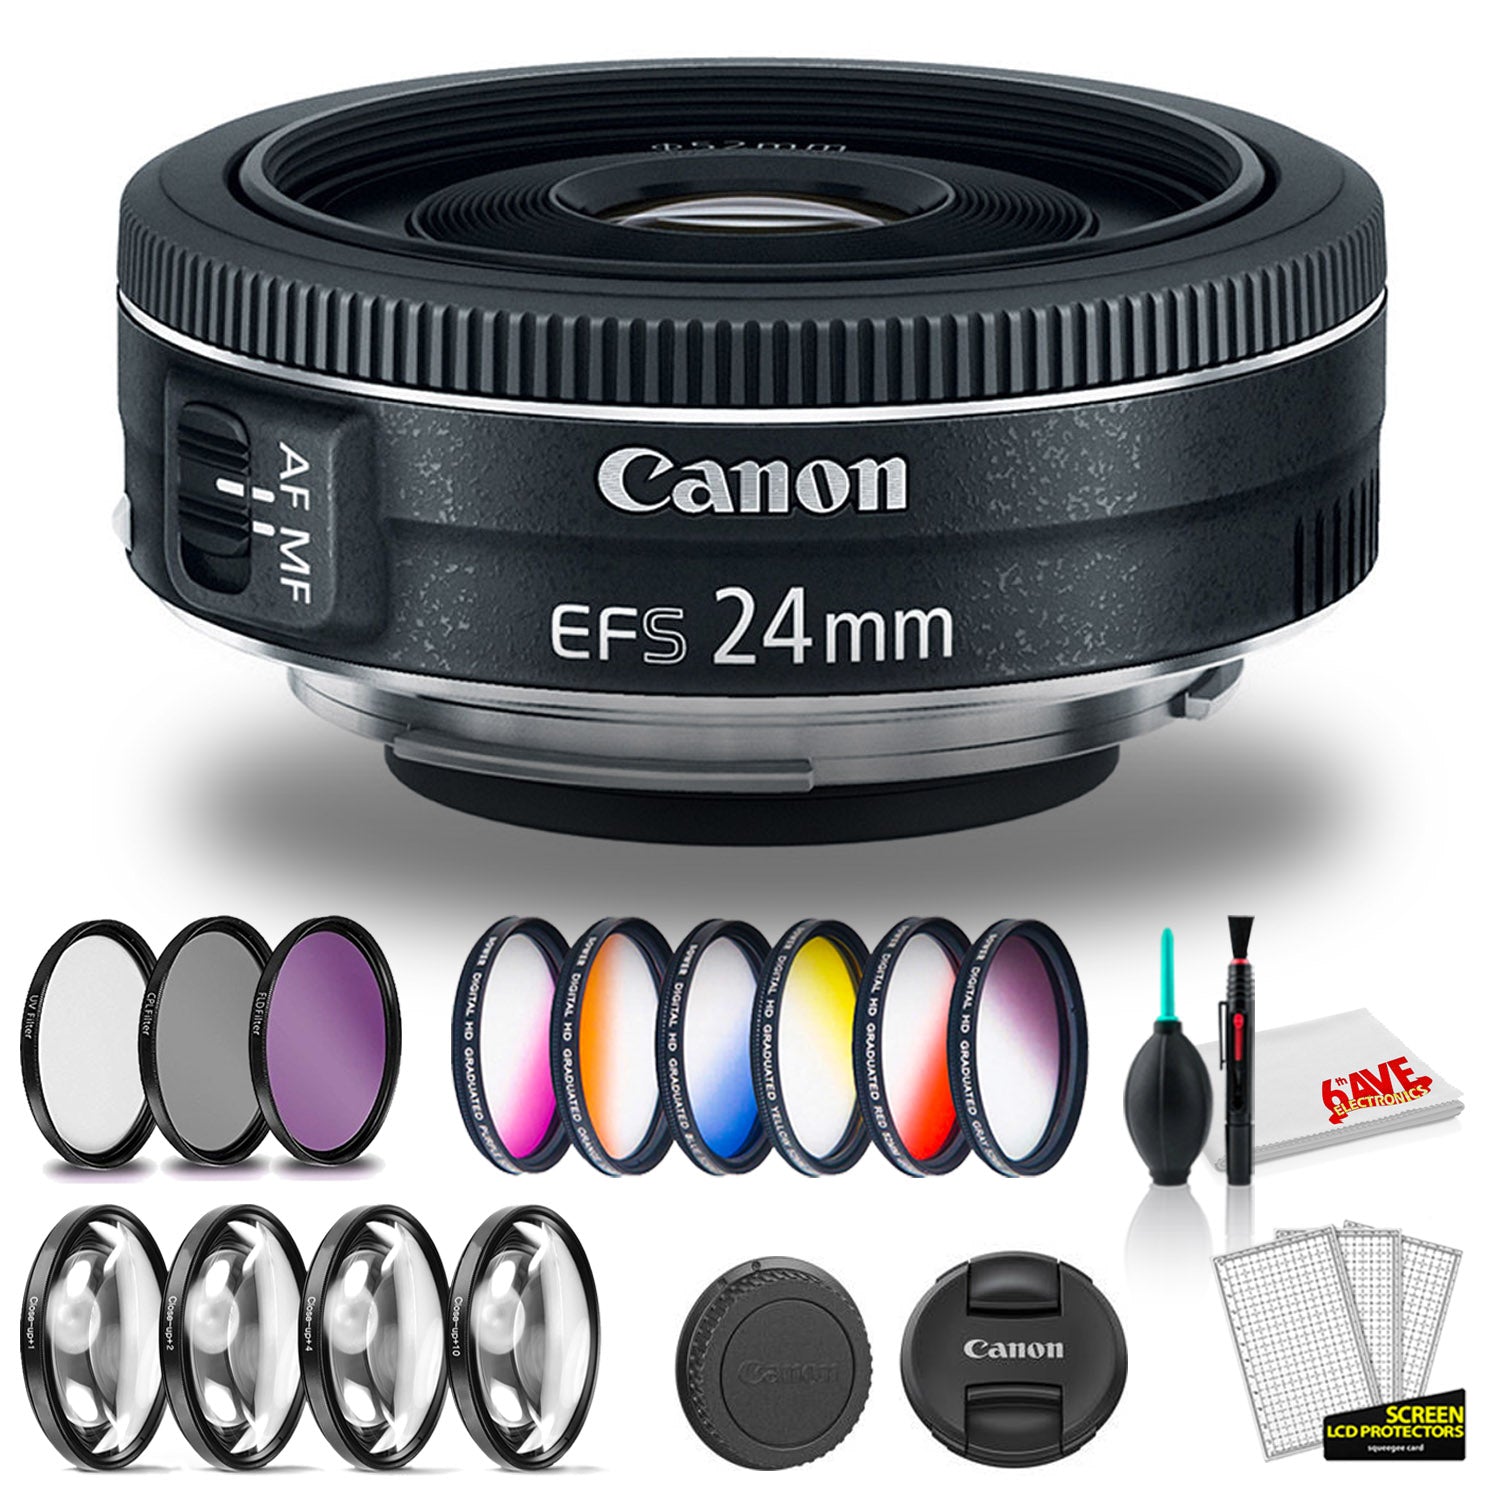 Canon EF-S 24mm f/2.8 STM Lens (International Model) with Filter Kits